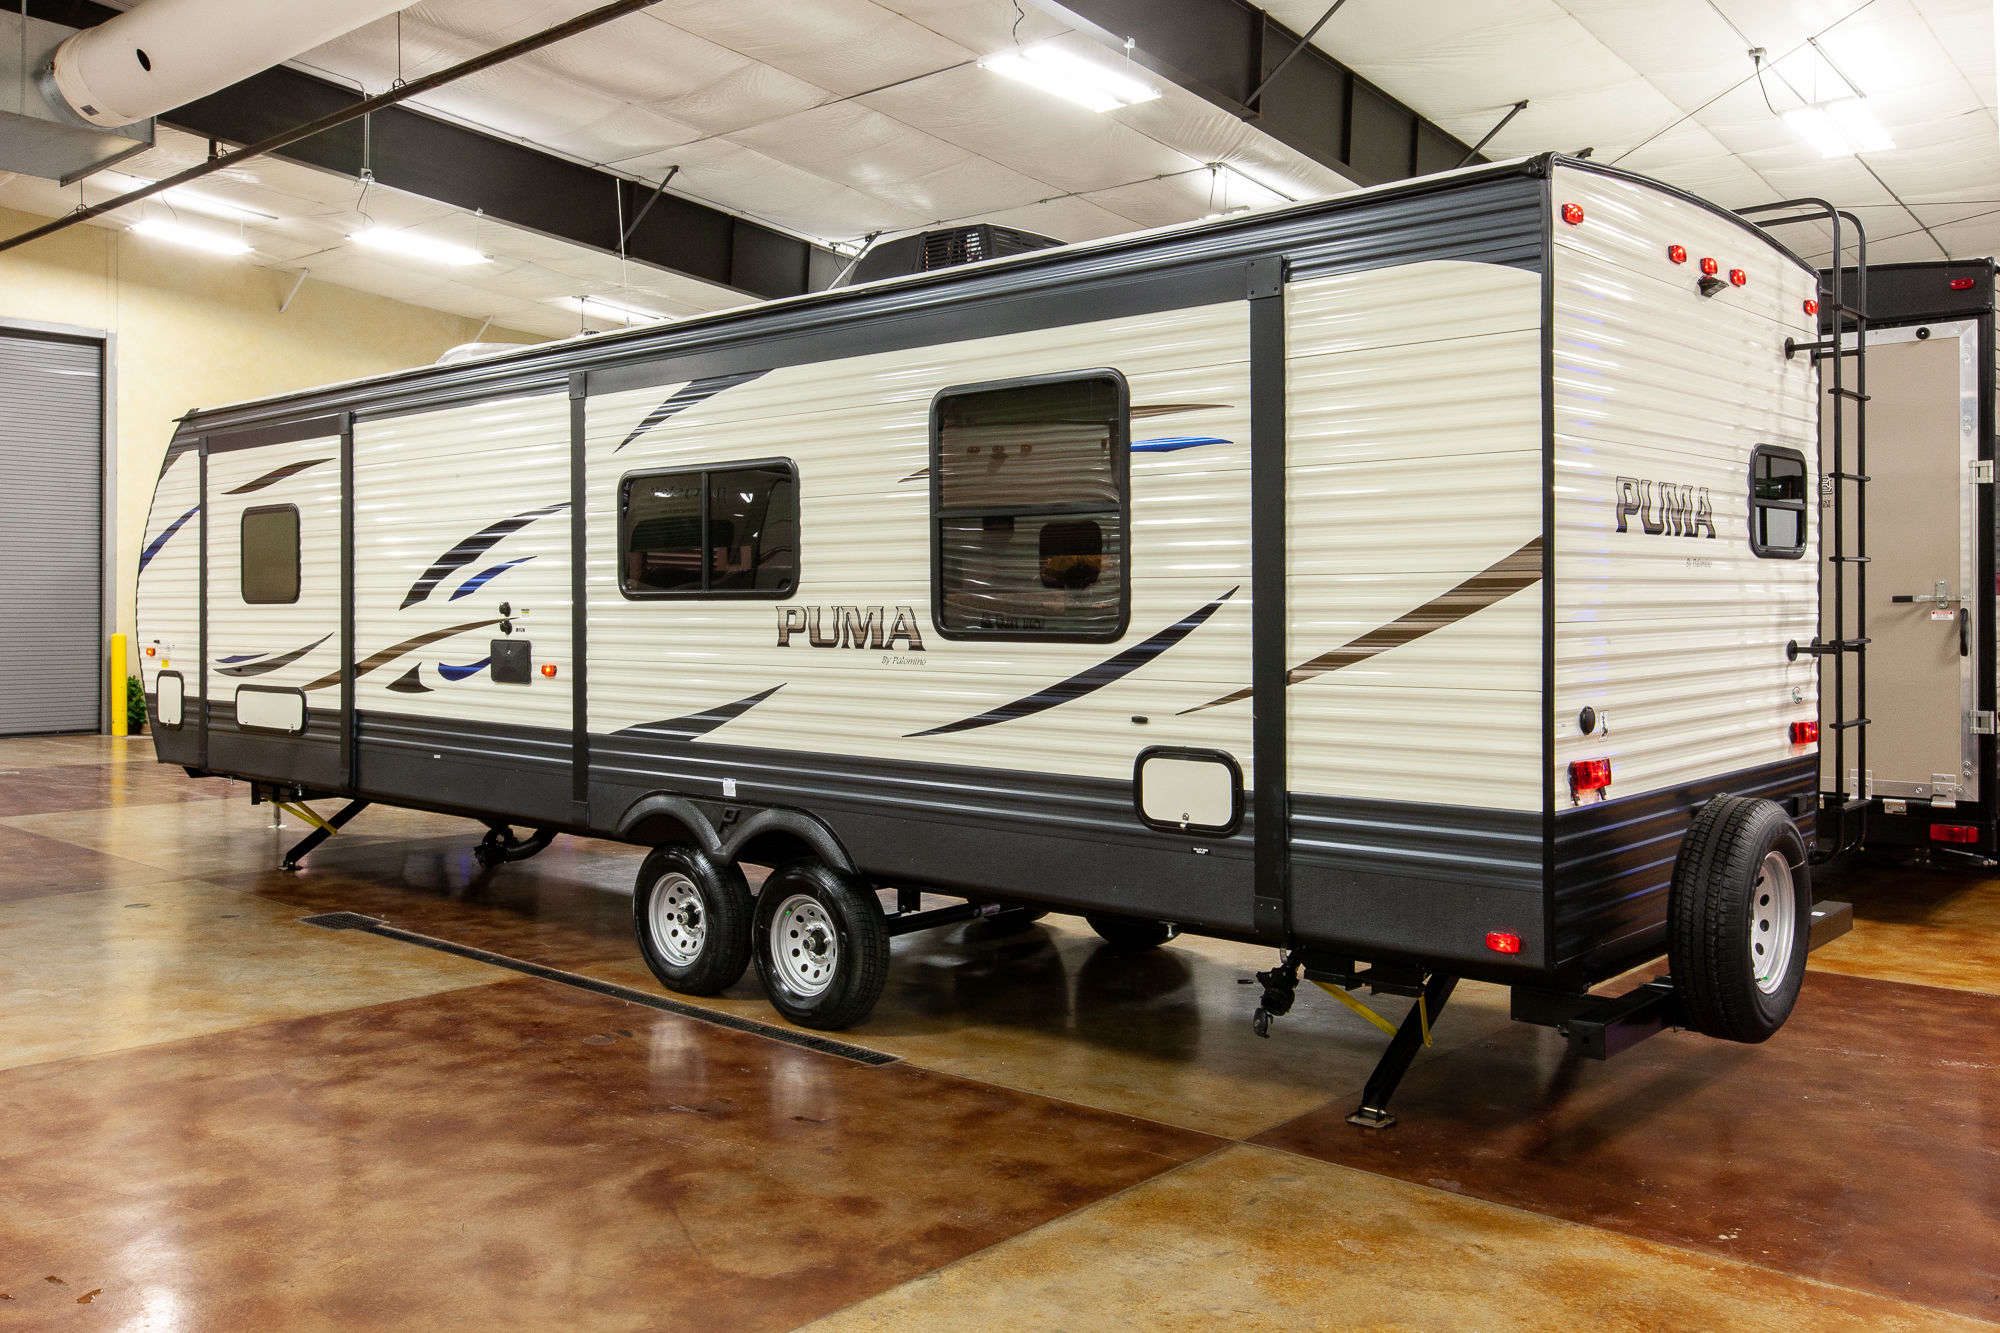 19 foot puma travel trailer